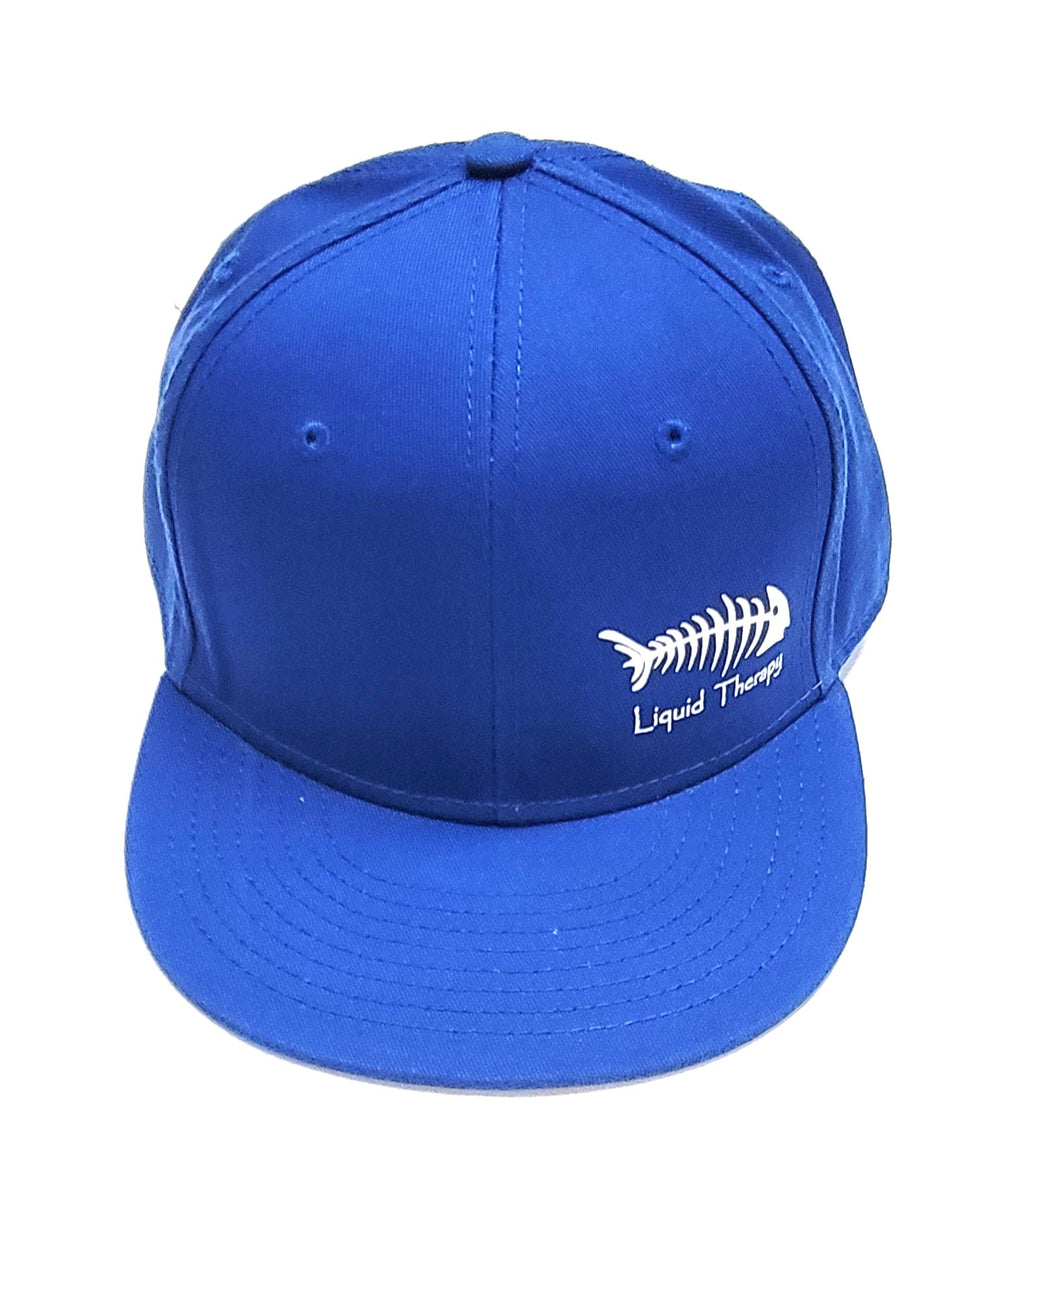 Fishbones trucker hat-youth